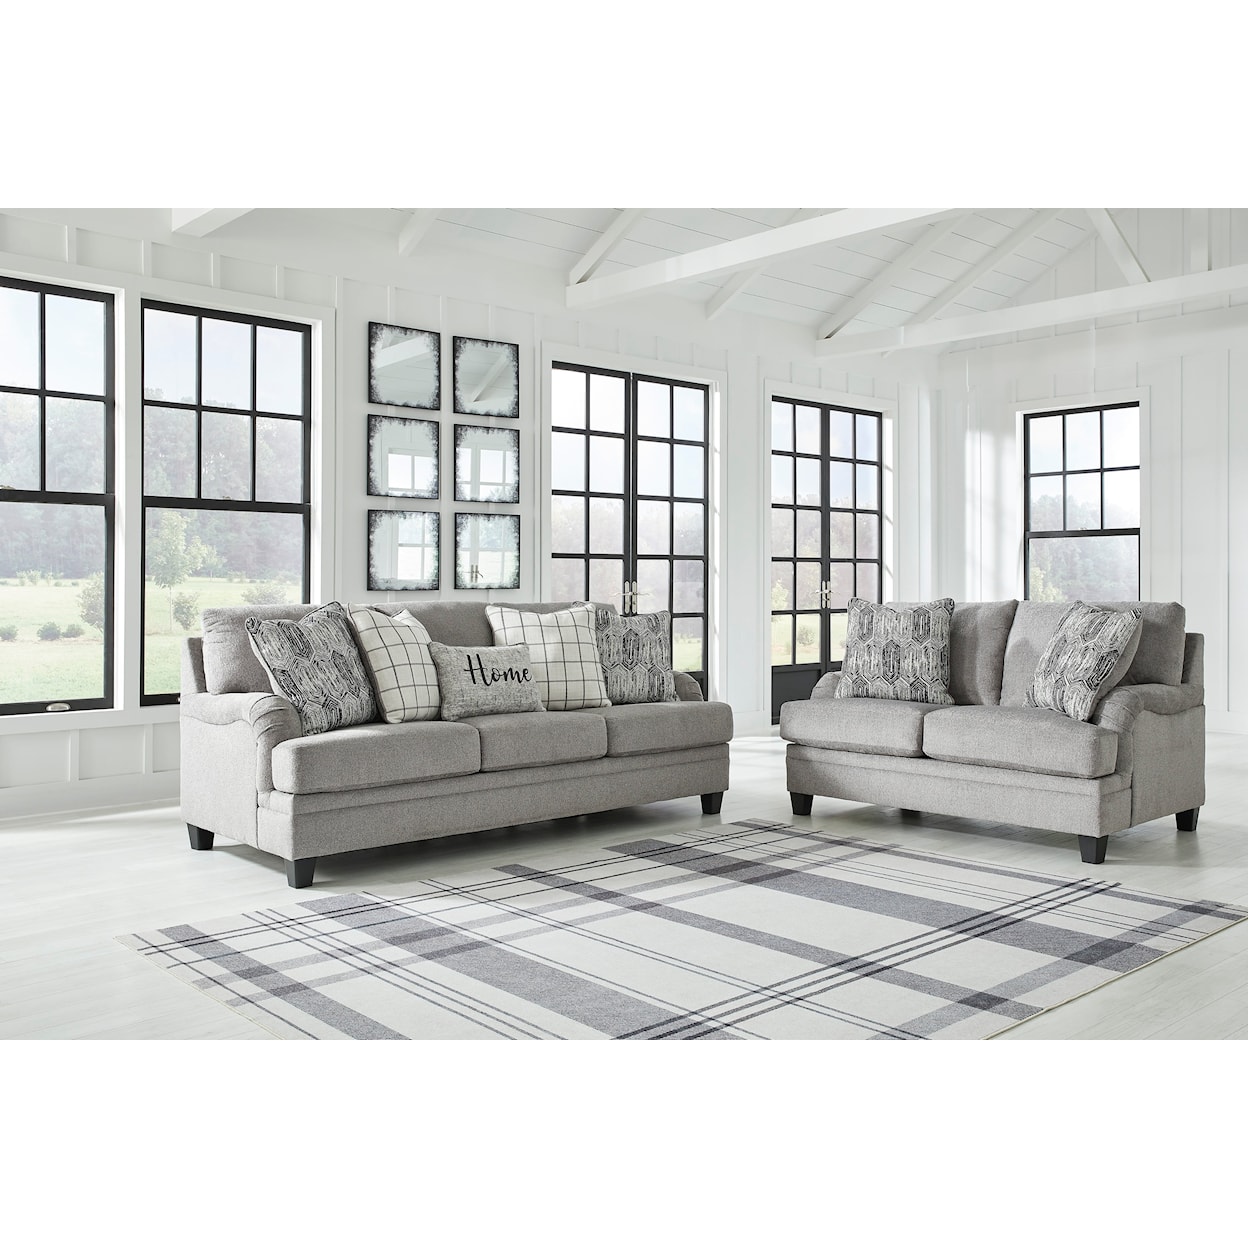 Ashley Furniture Benchcraft Davinca Living Room Set